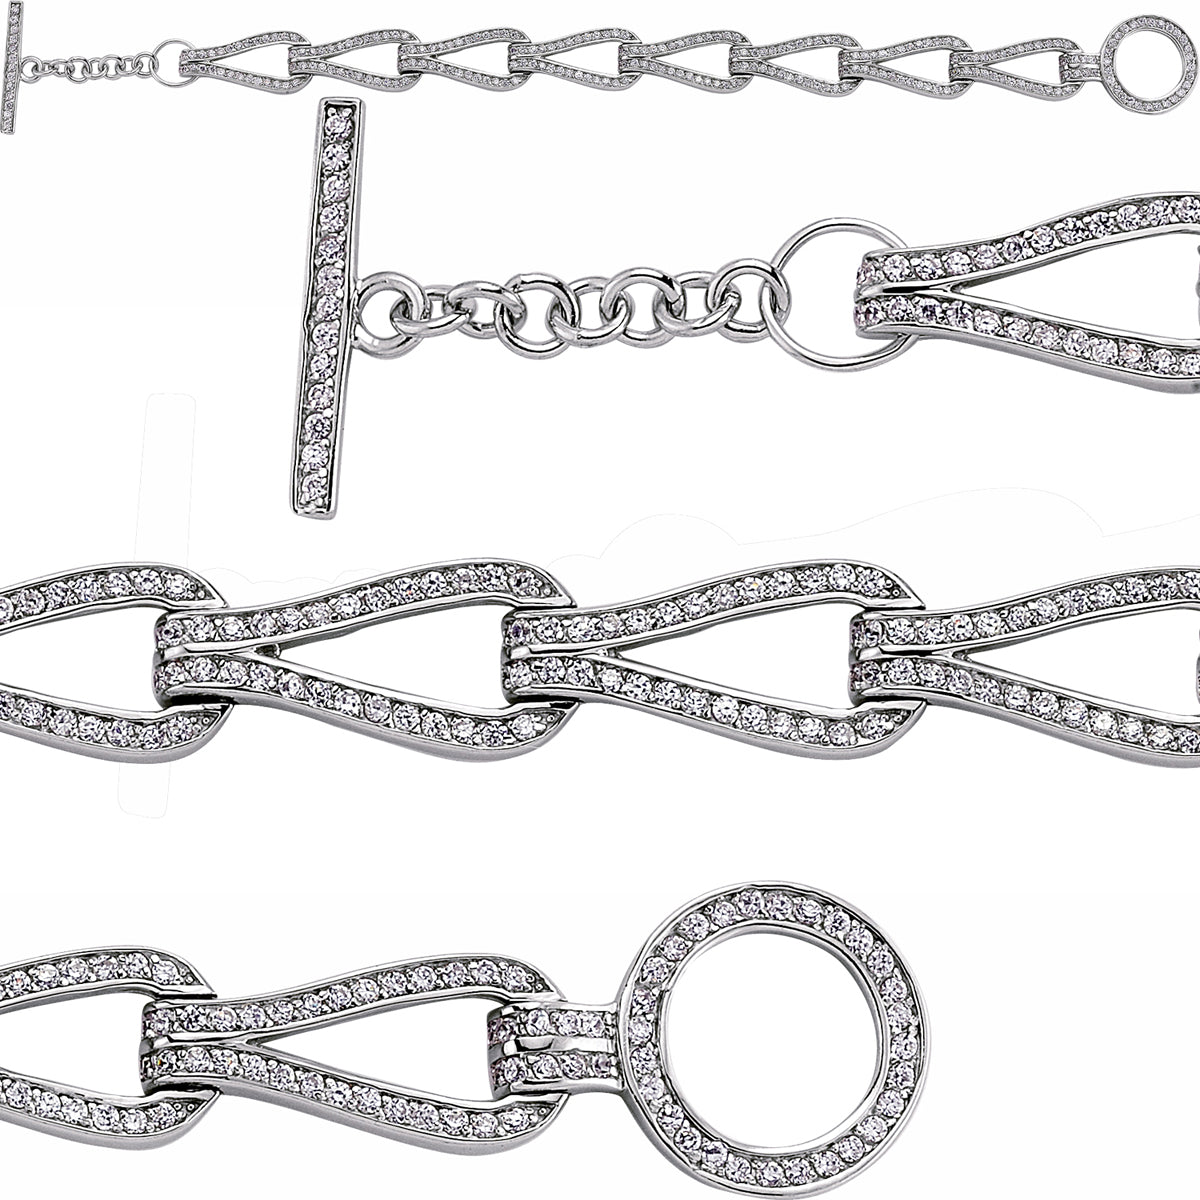 Silver  CZ Tears of Joy Pave Chain Bracelet 10mm 7 inch - GVB059